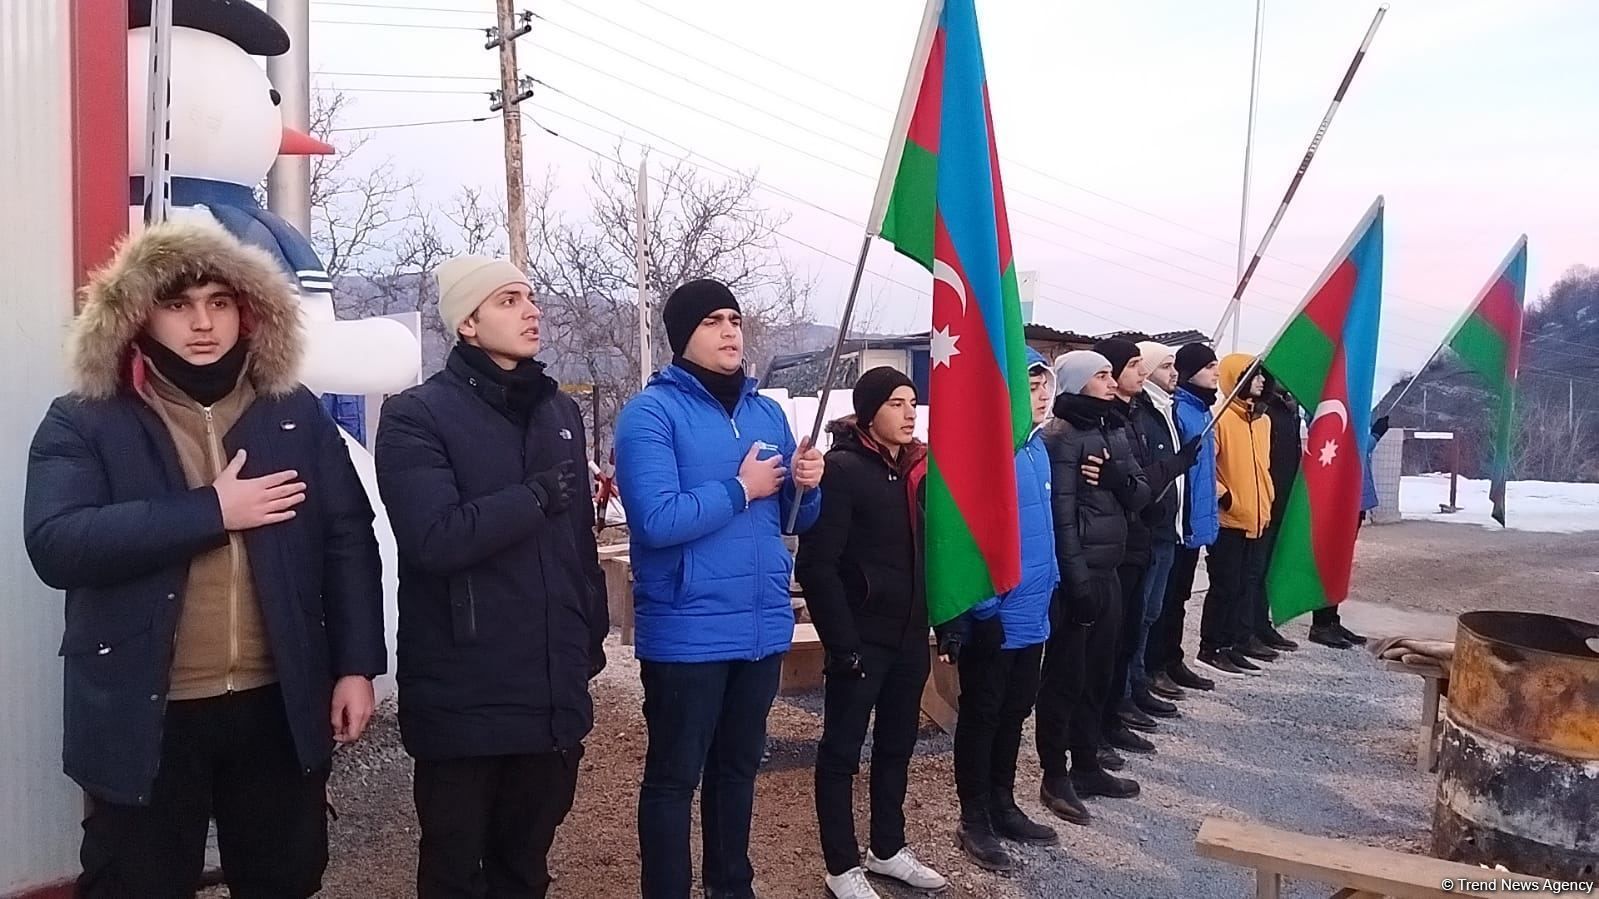 Azerbaijani media watchdog calls global media to objective coverage of protests in Karabakh [PHOTO]